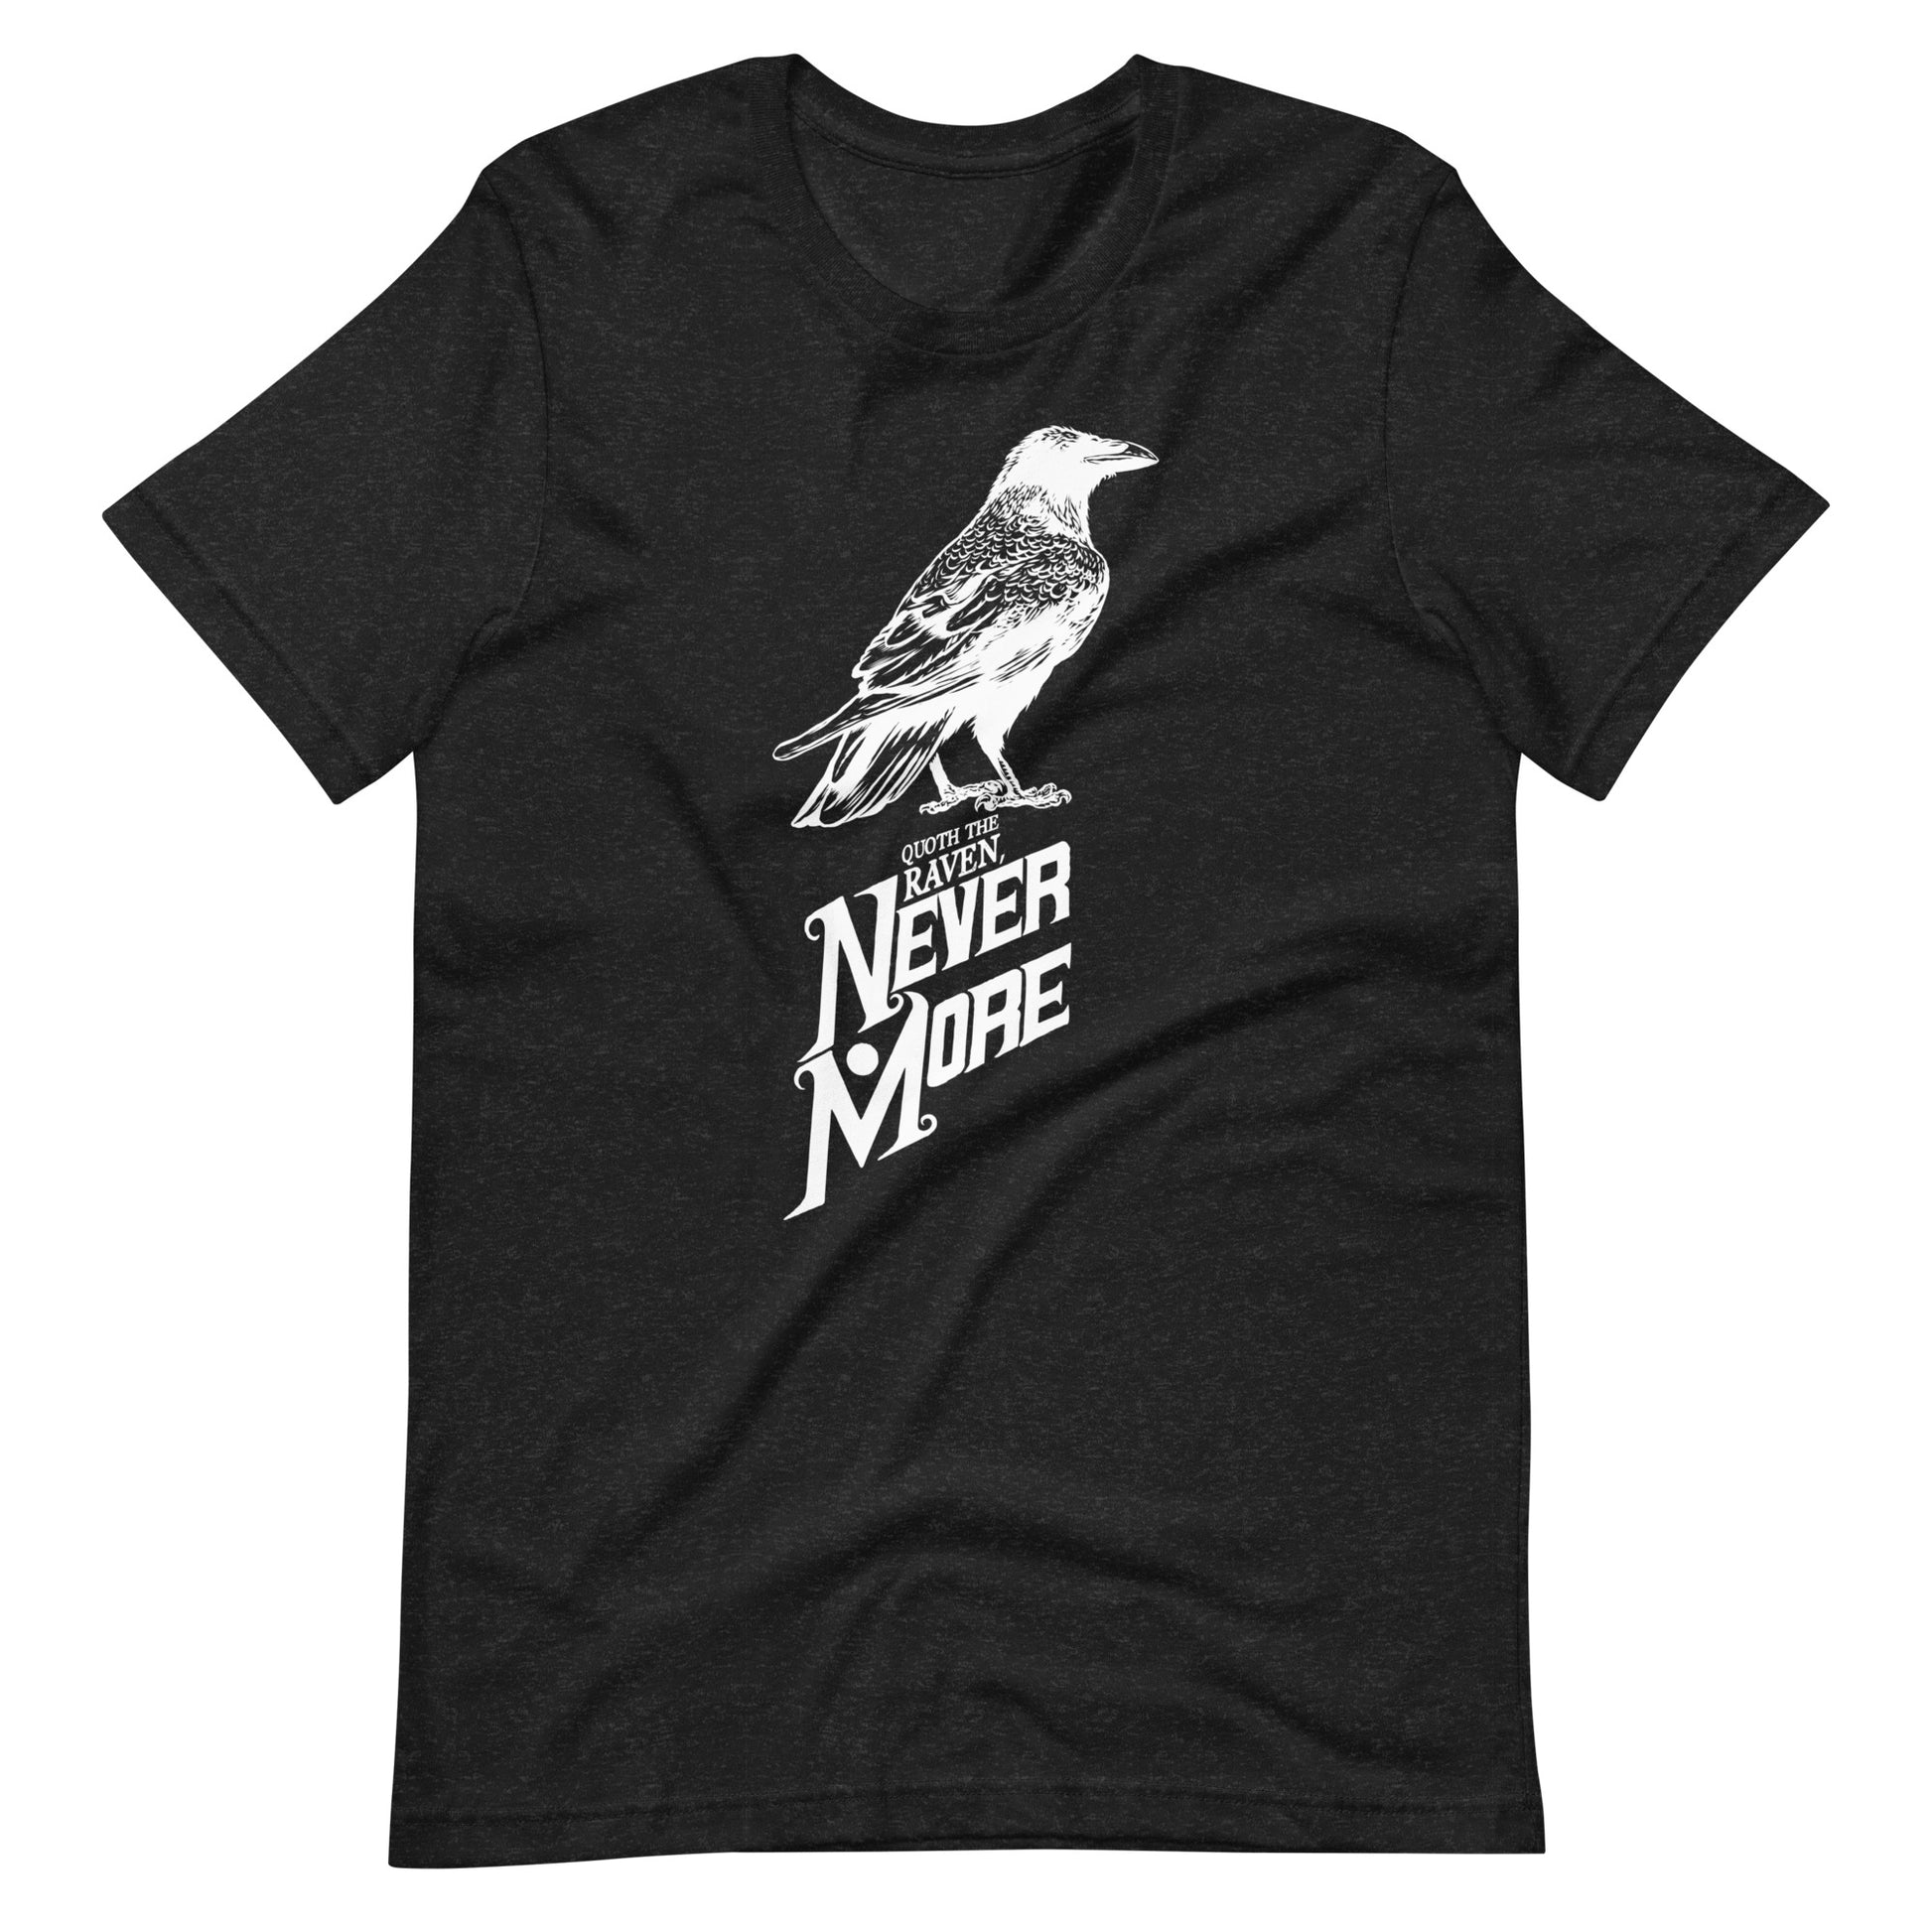 Quoth the Raven Nevermore - Men's t-shirt - Black Heather Front